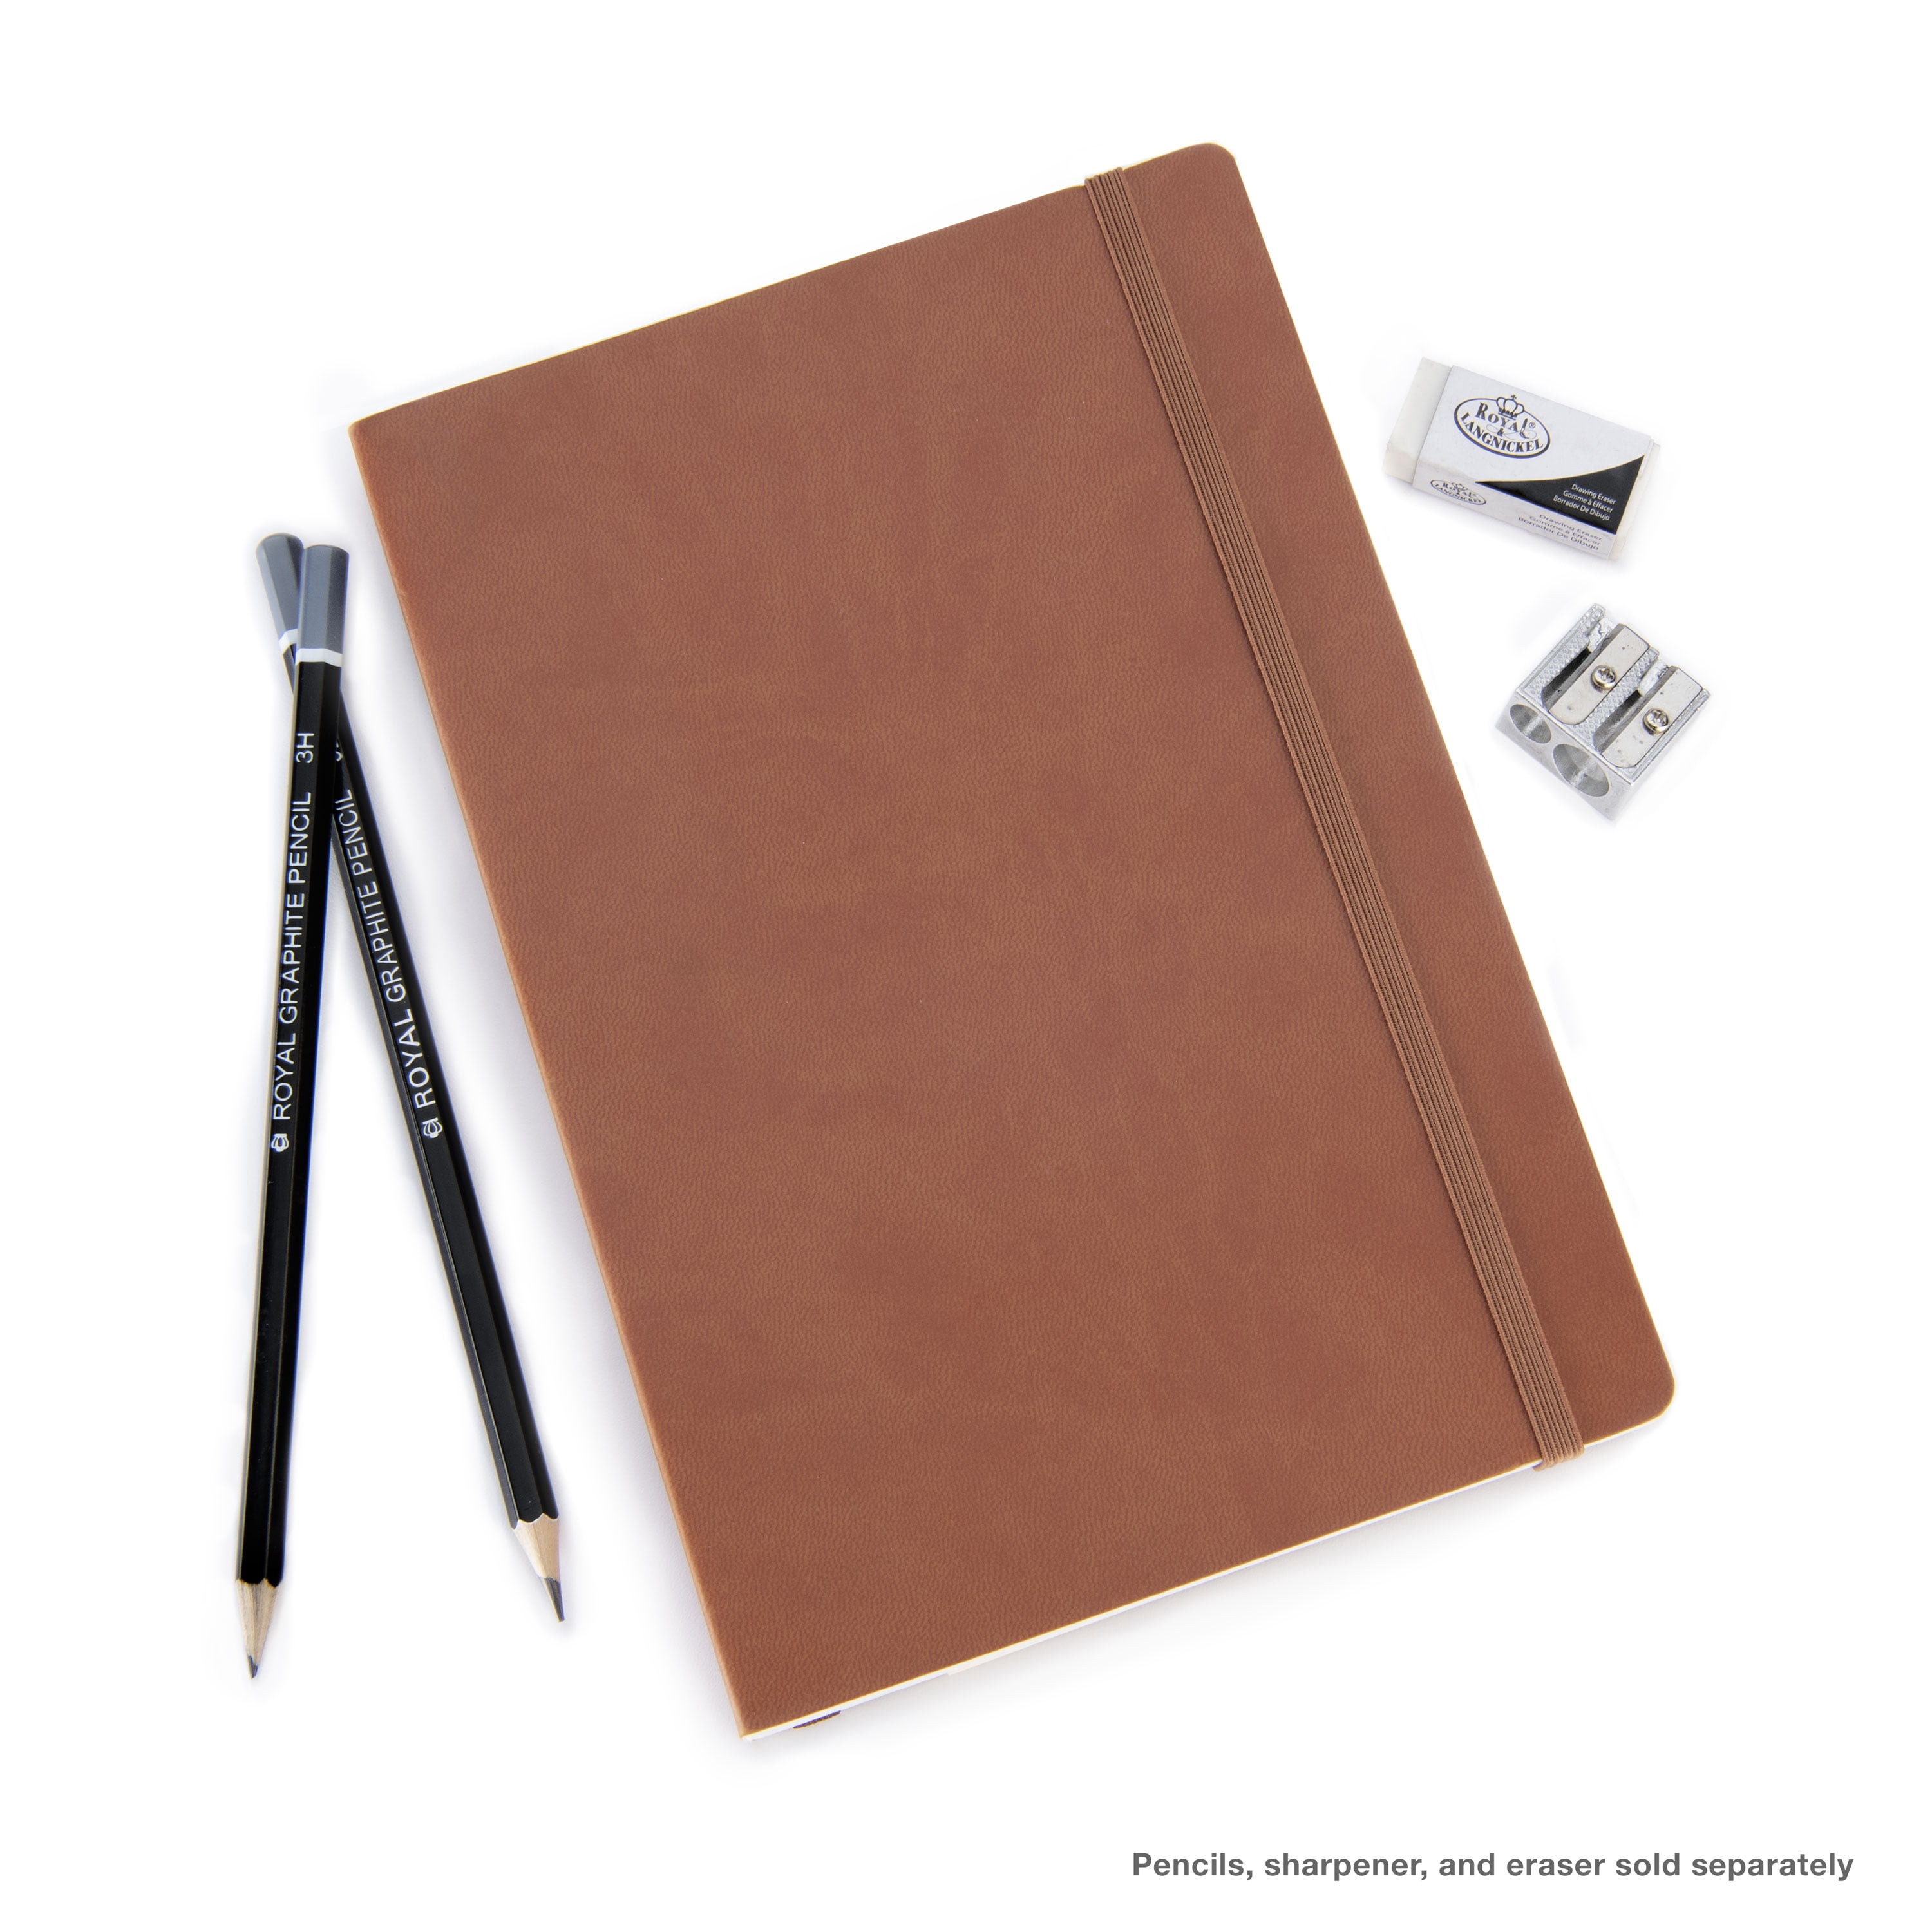  Pentalic 3 x 4 Pocket Sketchbook Traveler Journal, 160 Pages,  Royal Blue : Office Products